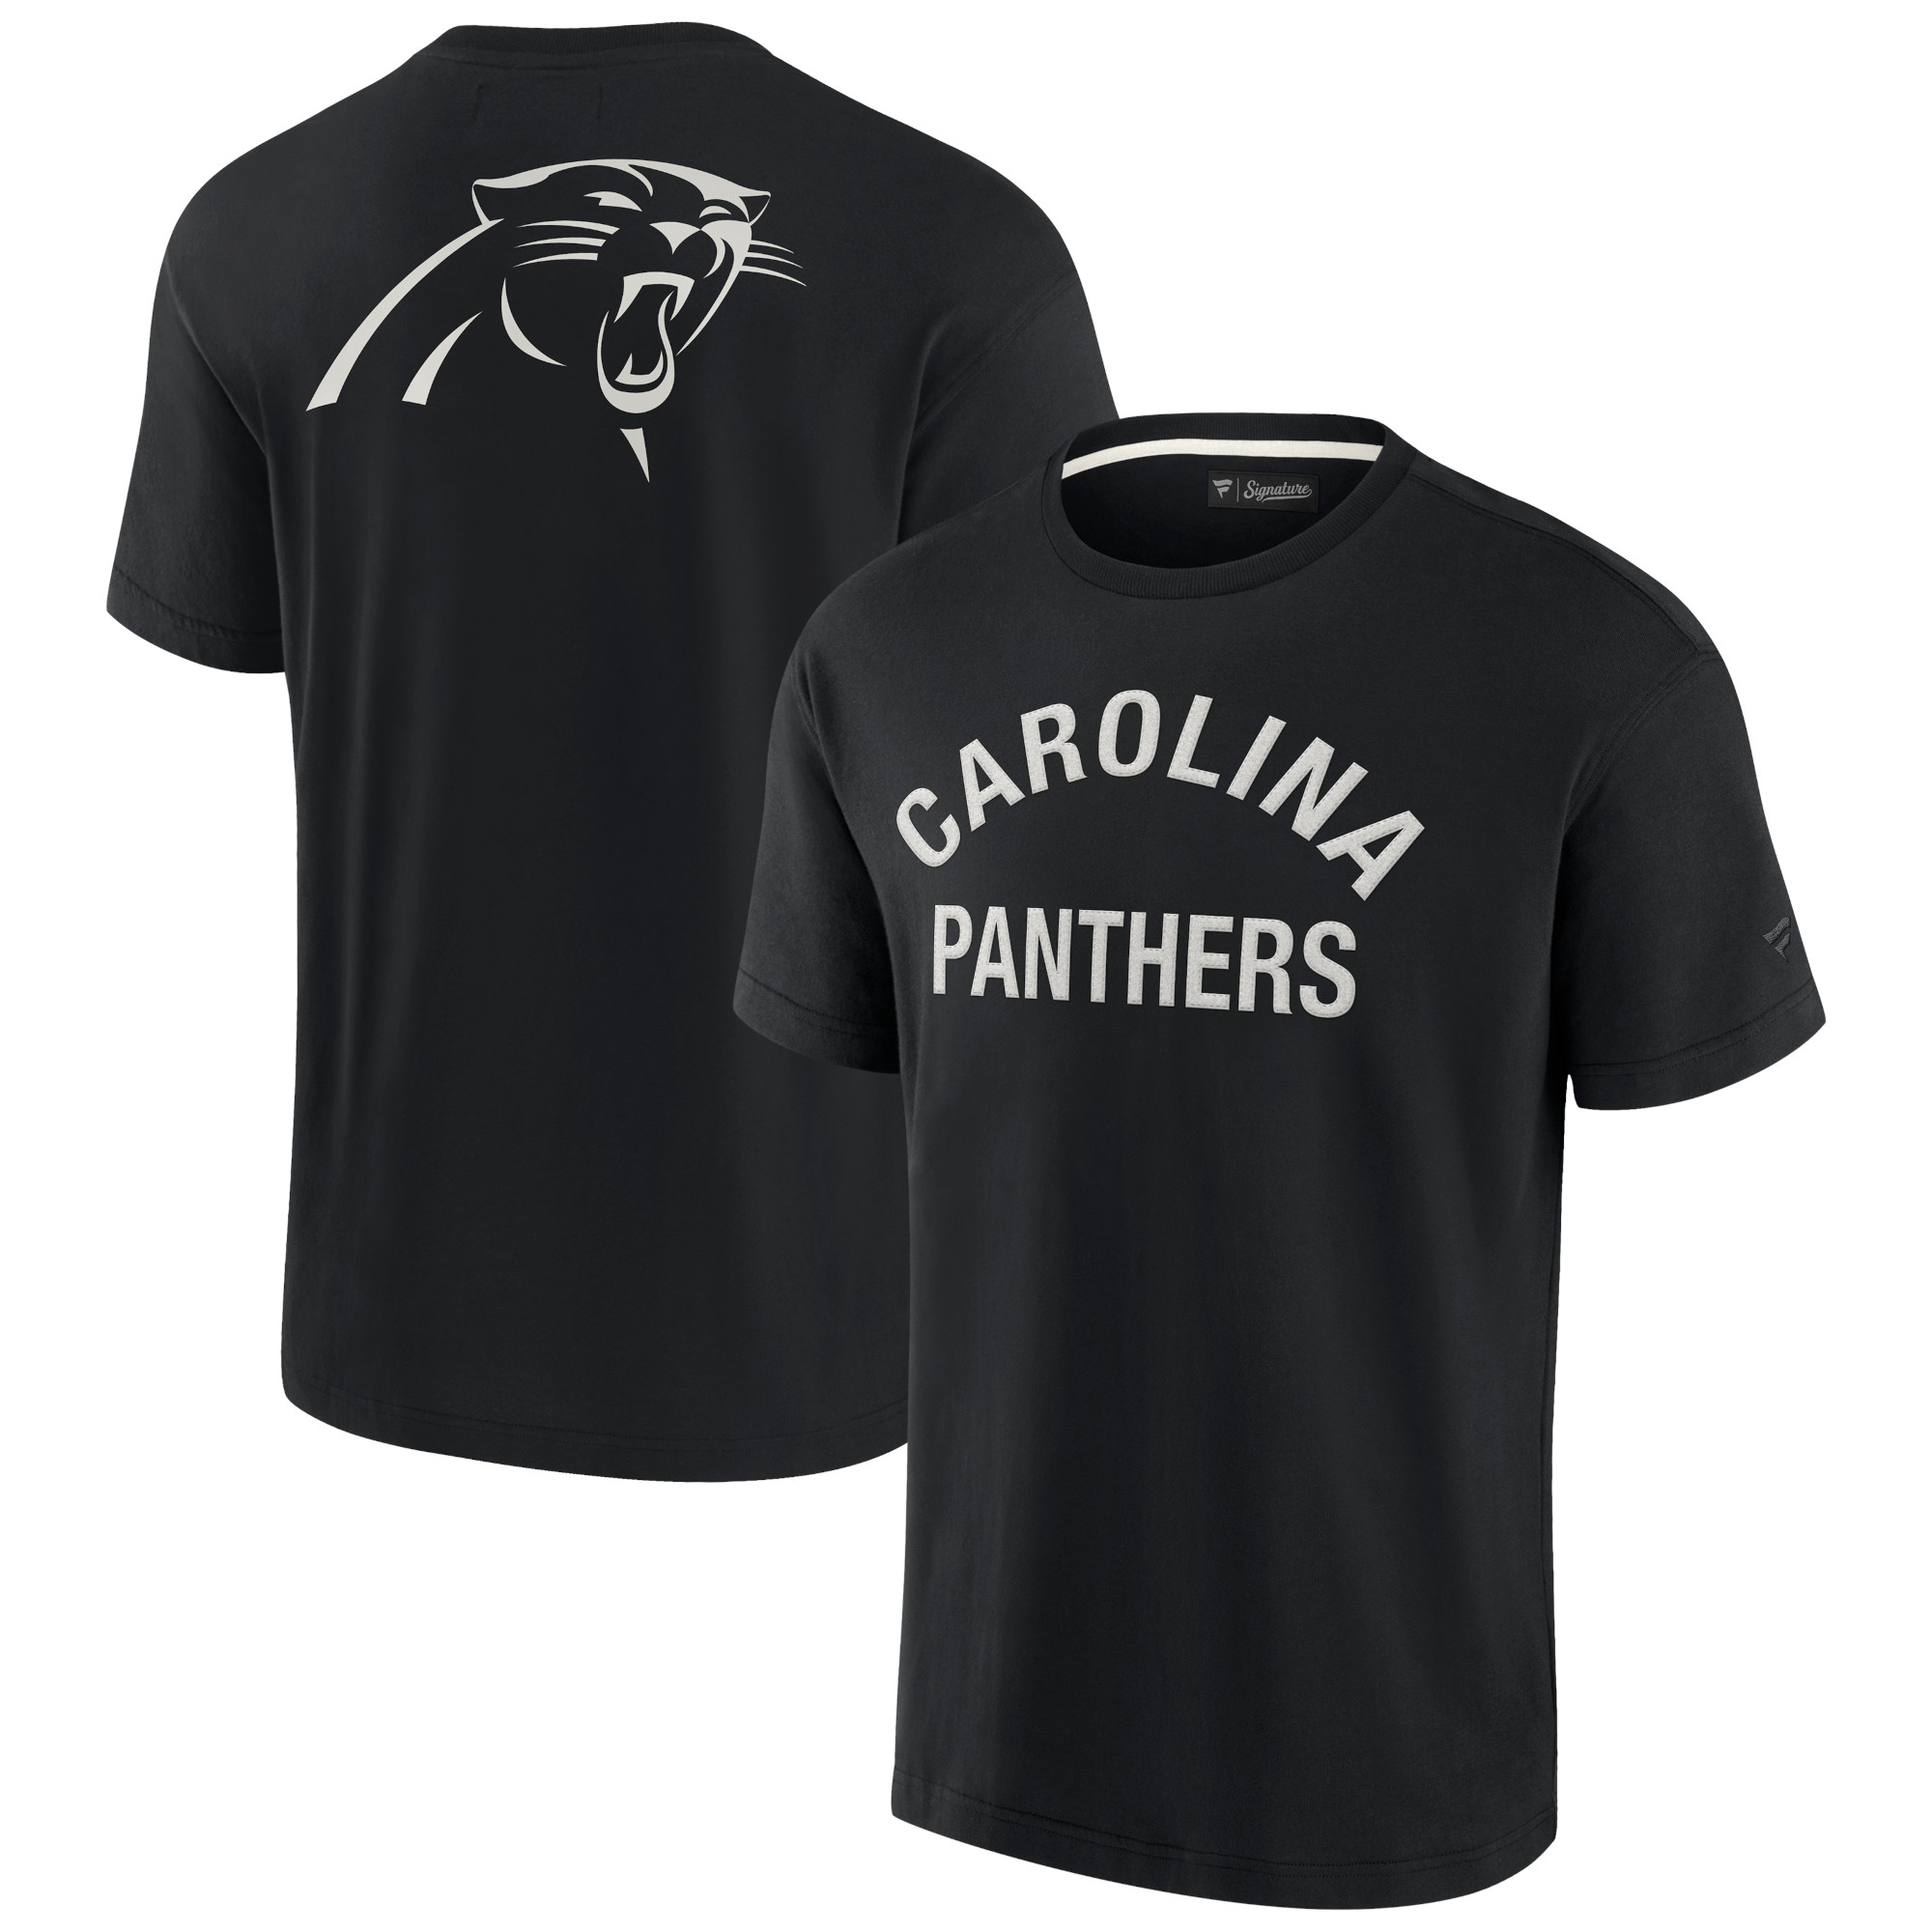 Unisex Fanatics Schwarzes Carolina Panthers Elements Superweiches Kurzarm-T-Shirt